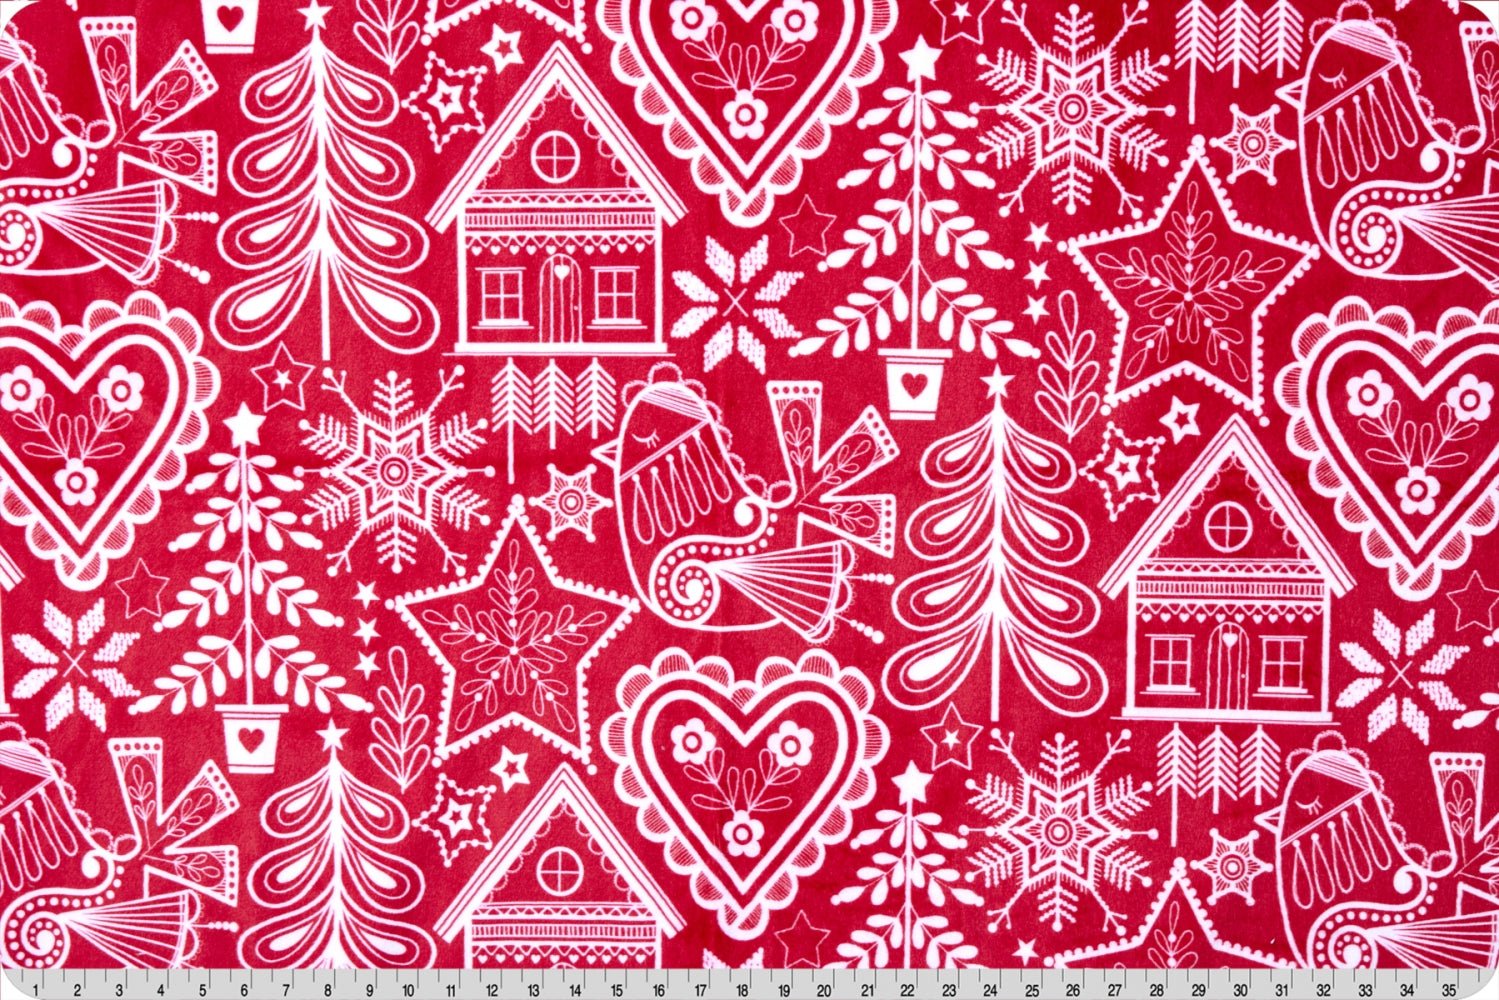 Shannon Fabrics Luxe Cuddle Summit Ice Pink Minky Fabric 1 Yard